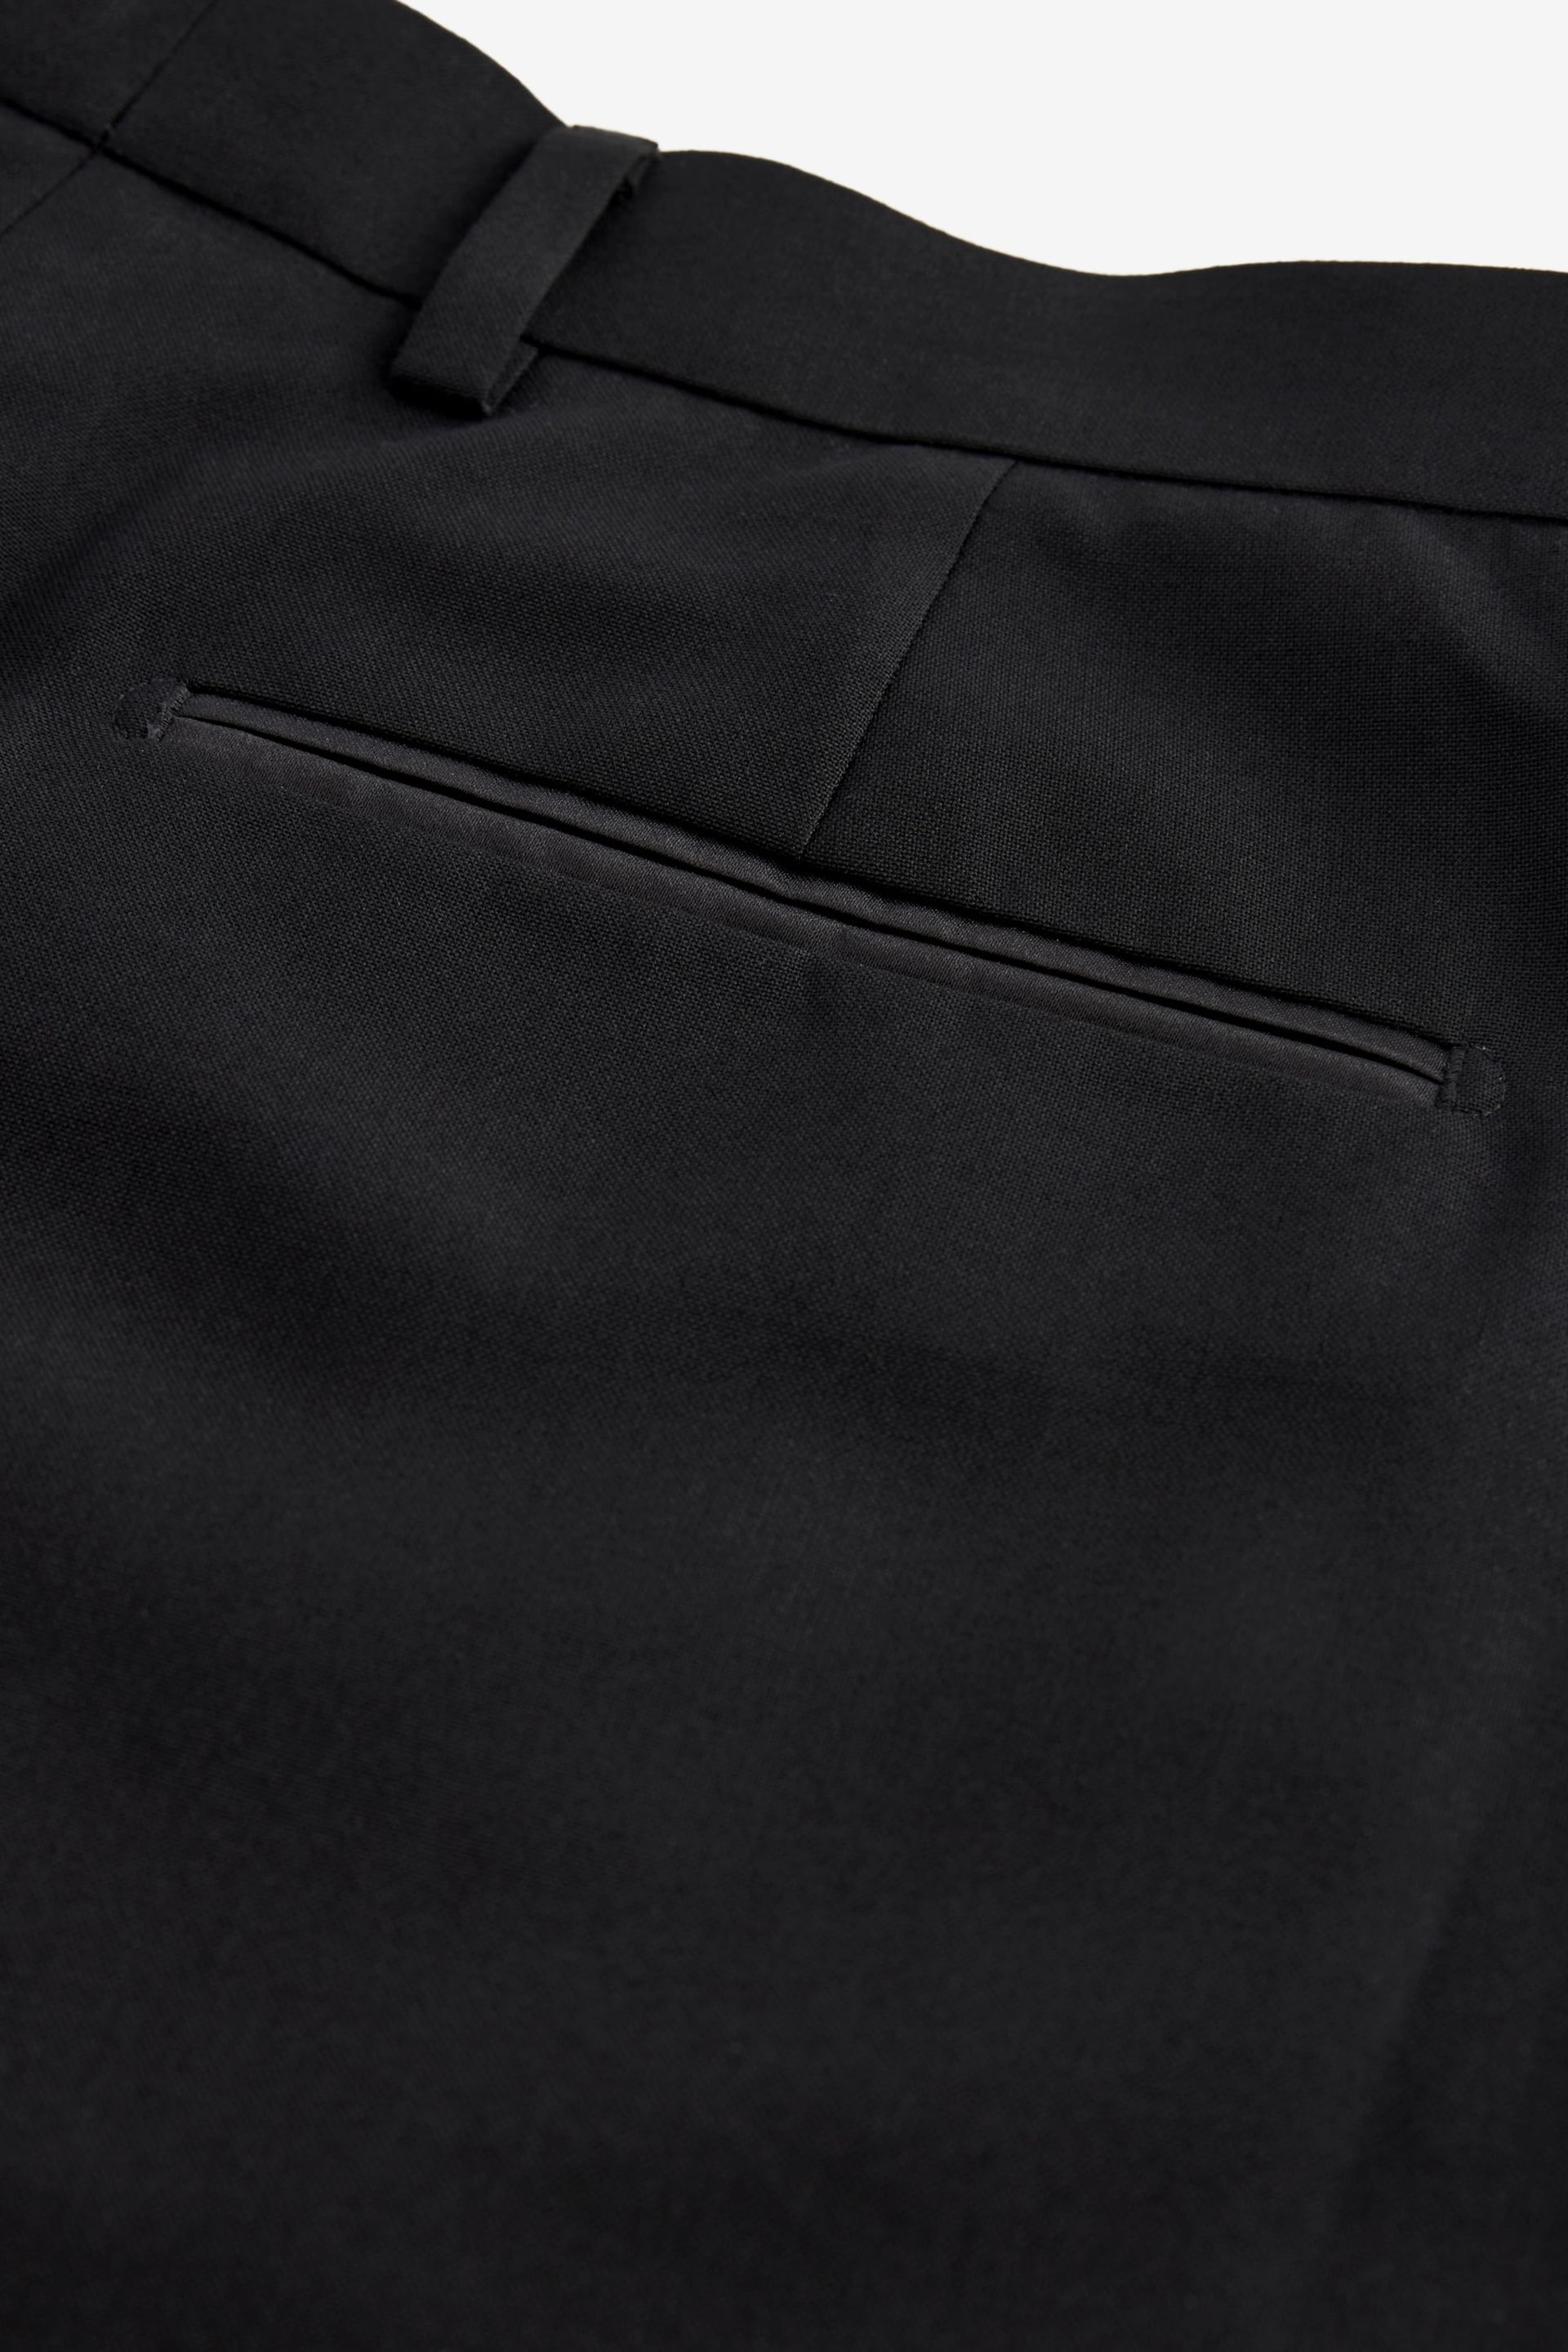 Black EDIT Oversized Tuxedo Suit Trousers - Image 7 of 9